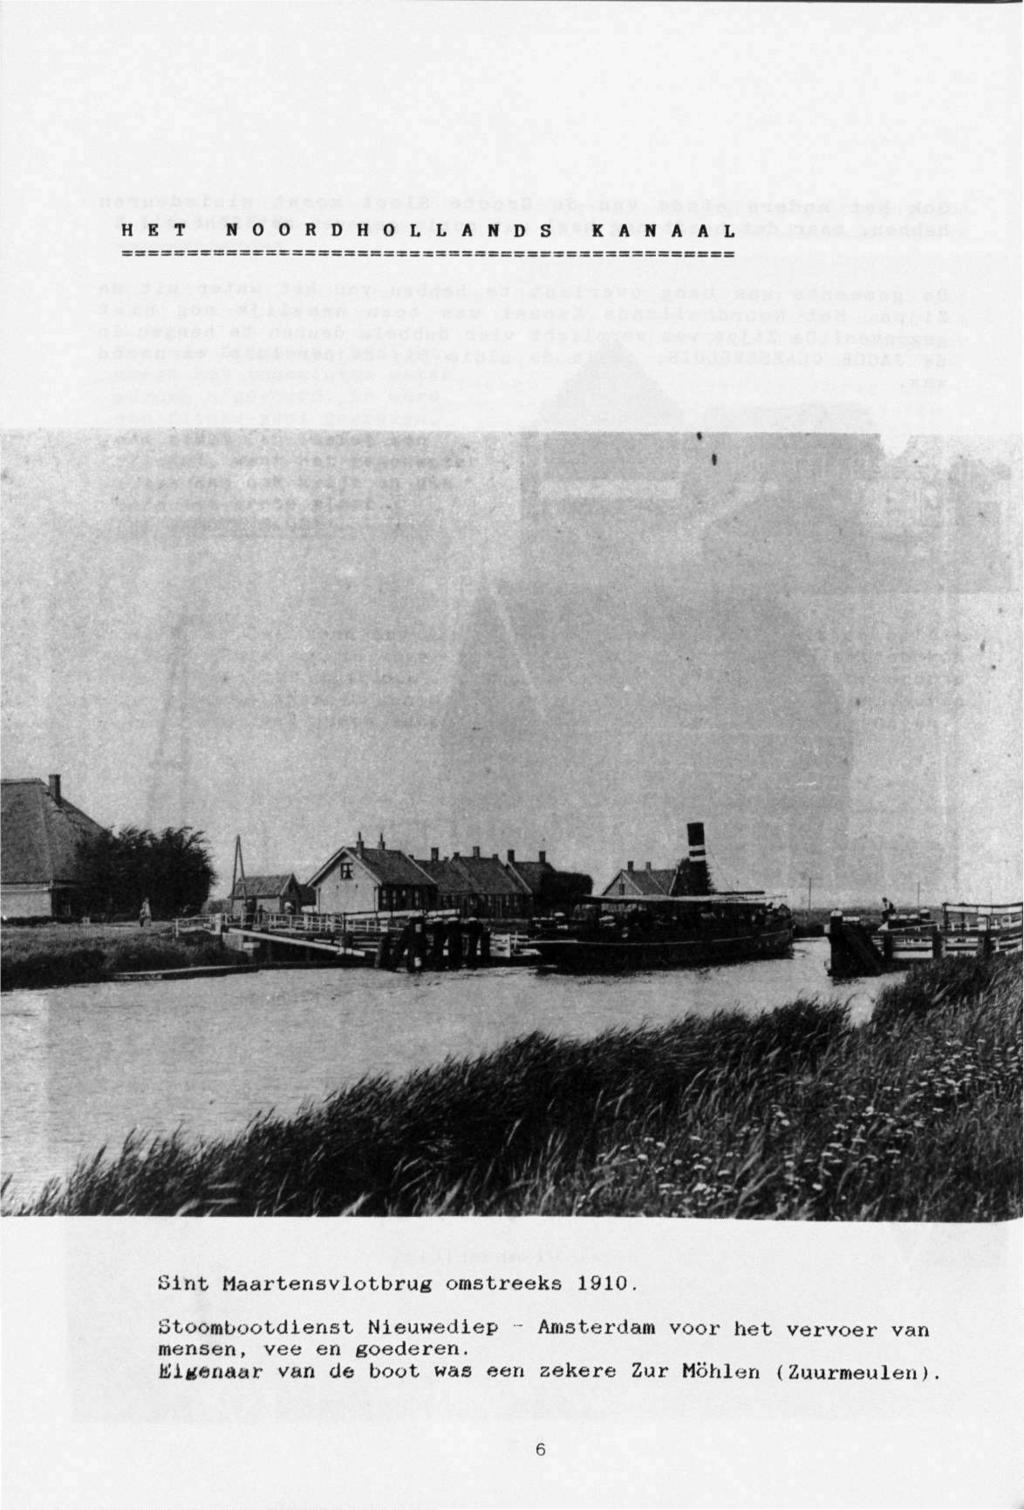 HET N O O R D H O L L A N D S KANAAL A~~, rr-usios Sint Maartensviotbrug omstreeks 1910 Stoombootdlenst Nieuwediep -